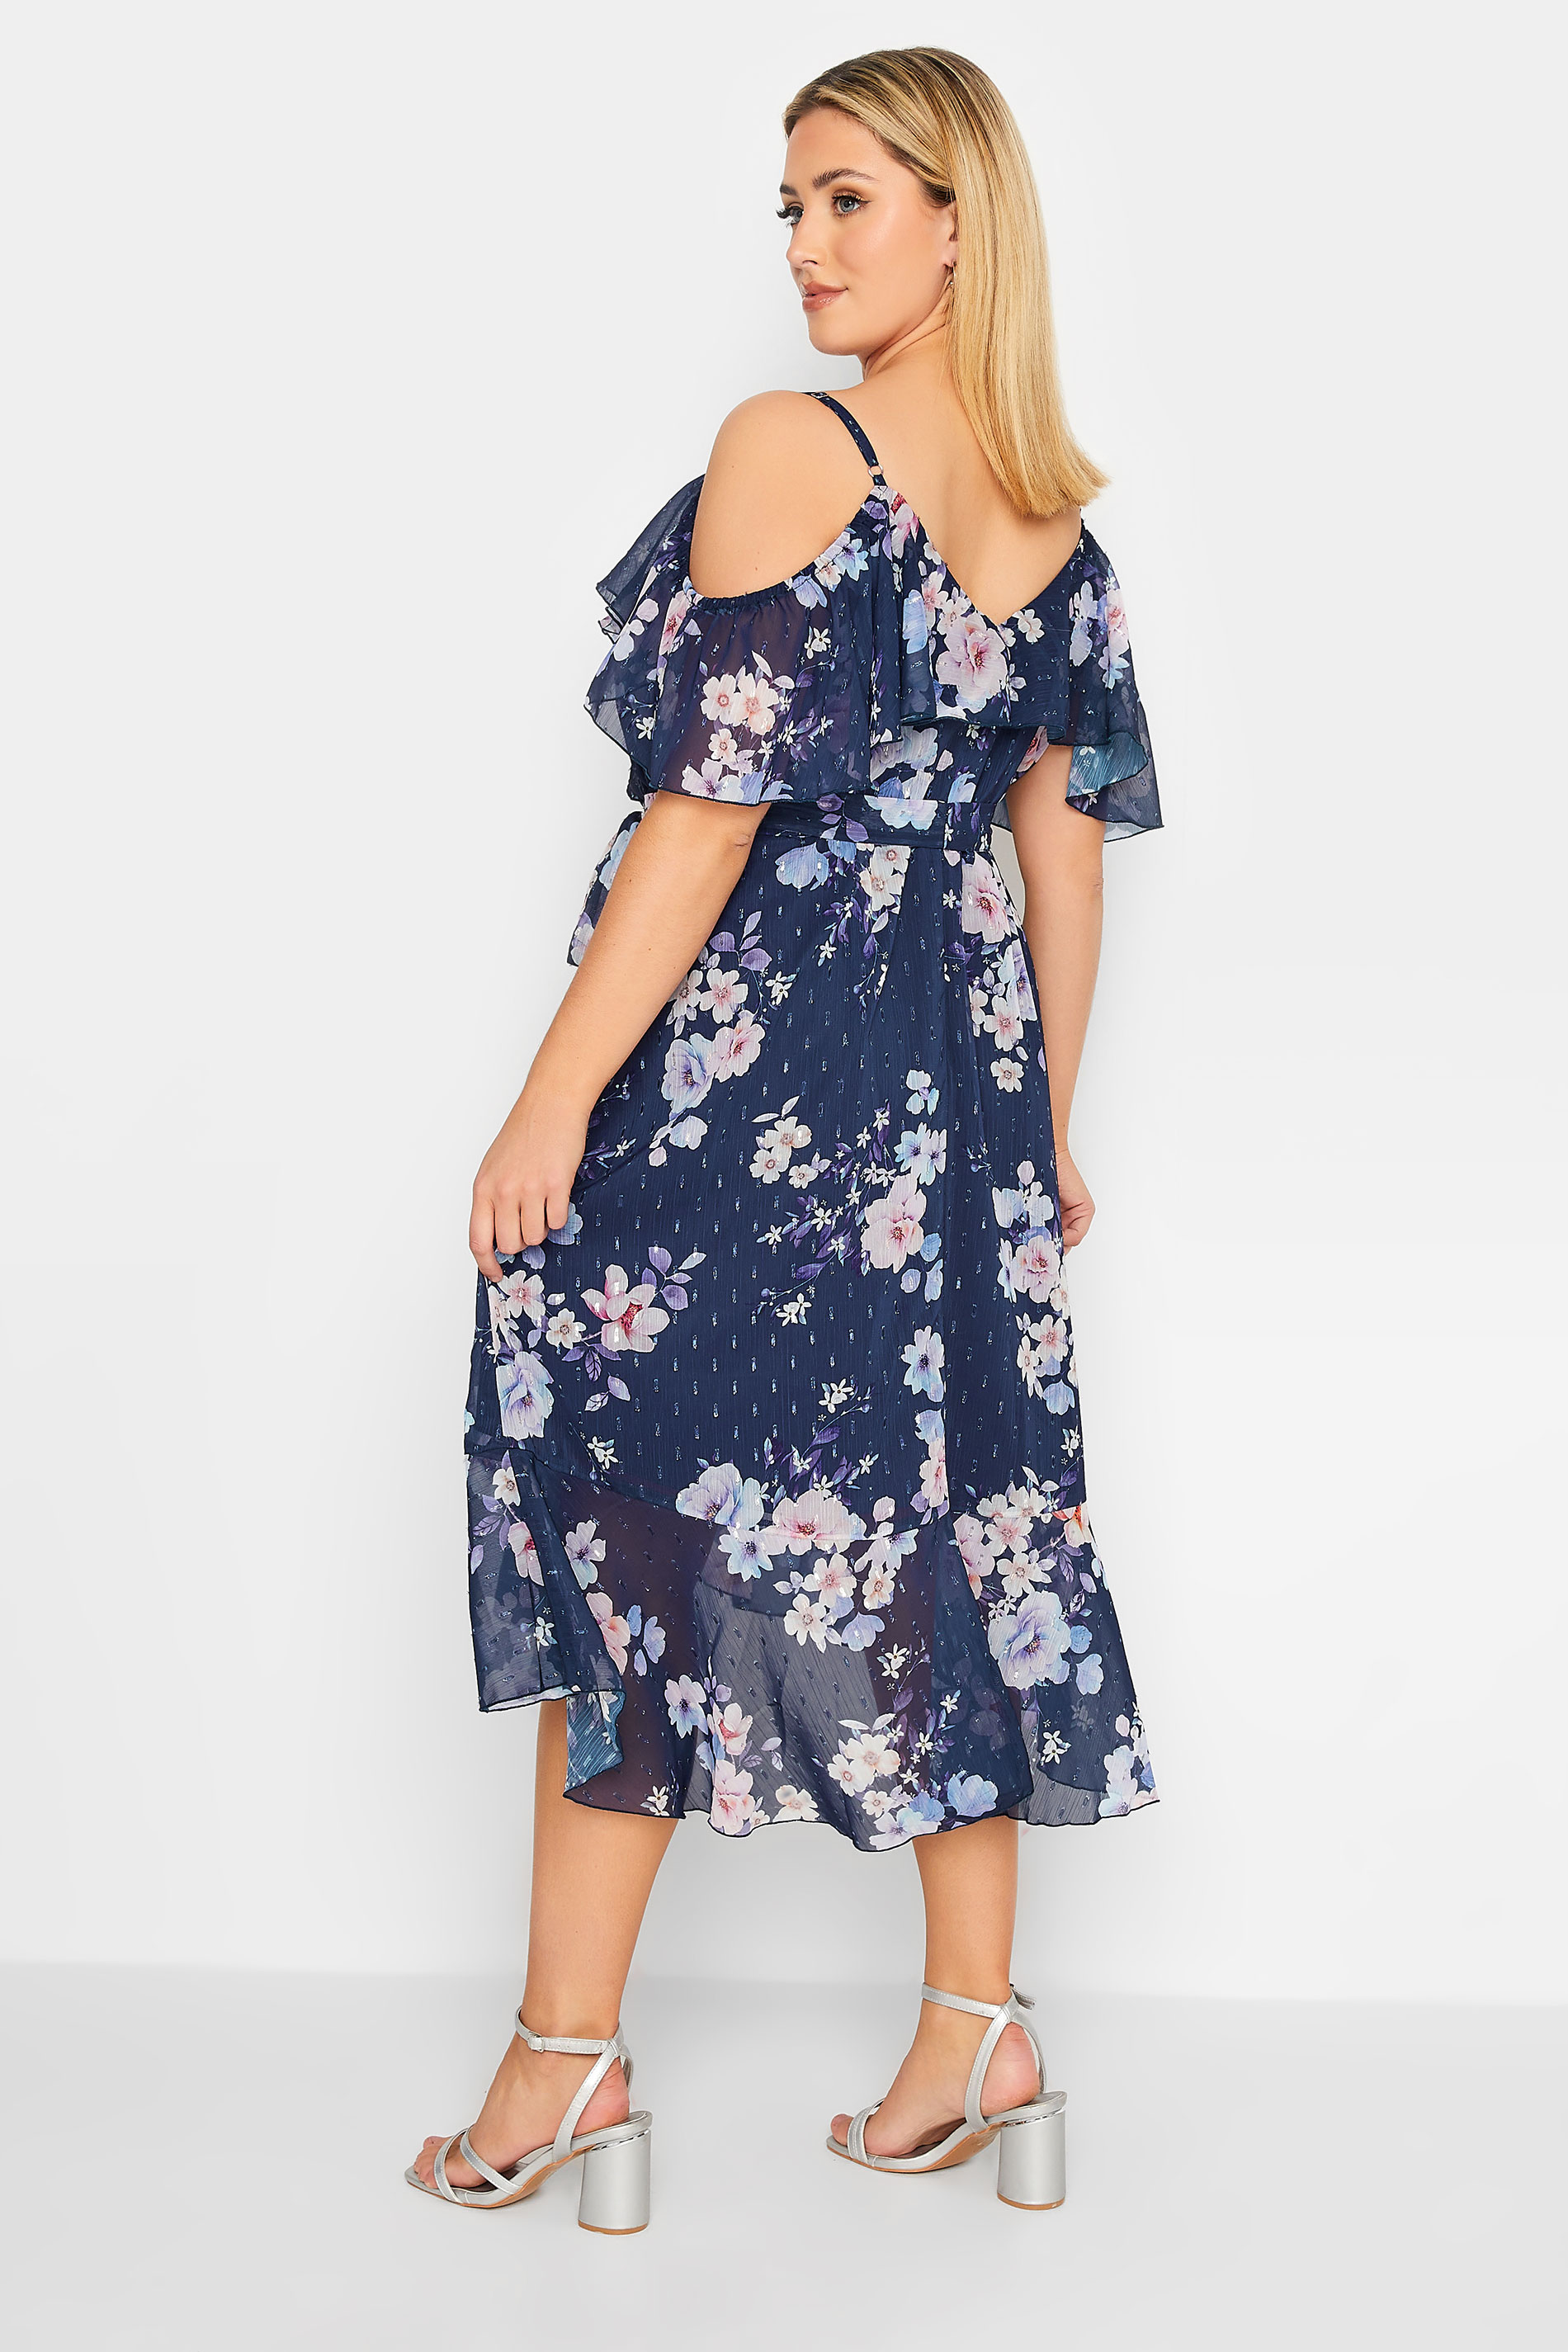 YOURS LONDON Plus Size Blue Floral Cold Shoulder Wrap Dress | Yours Clothing  3